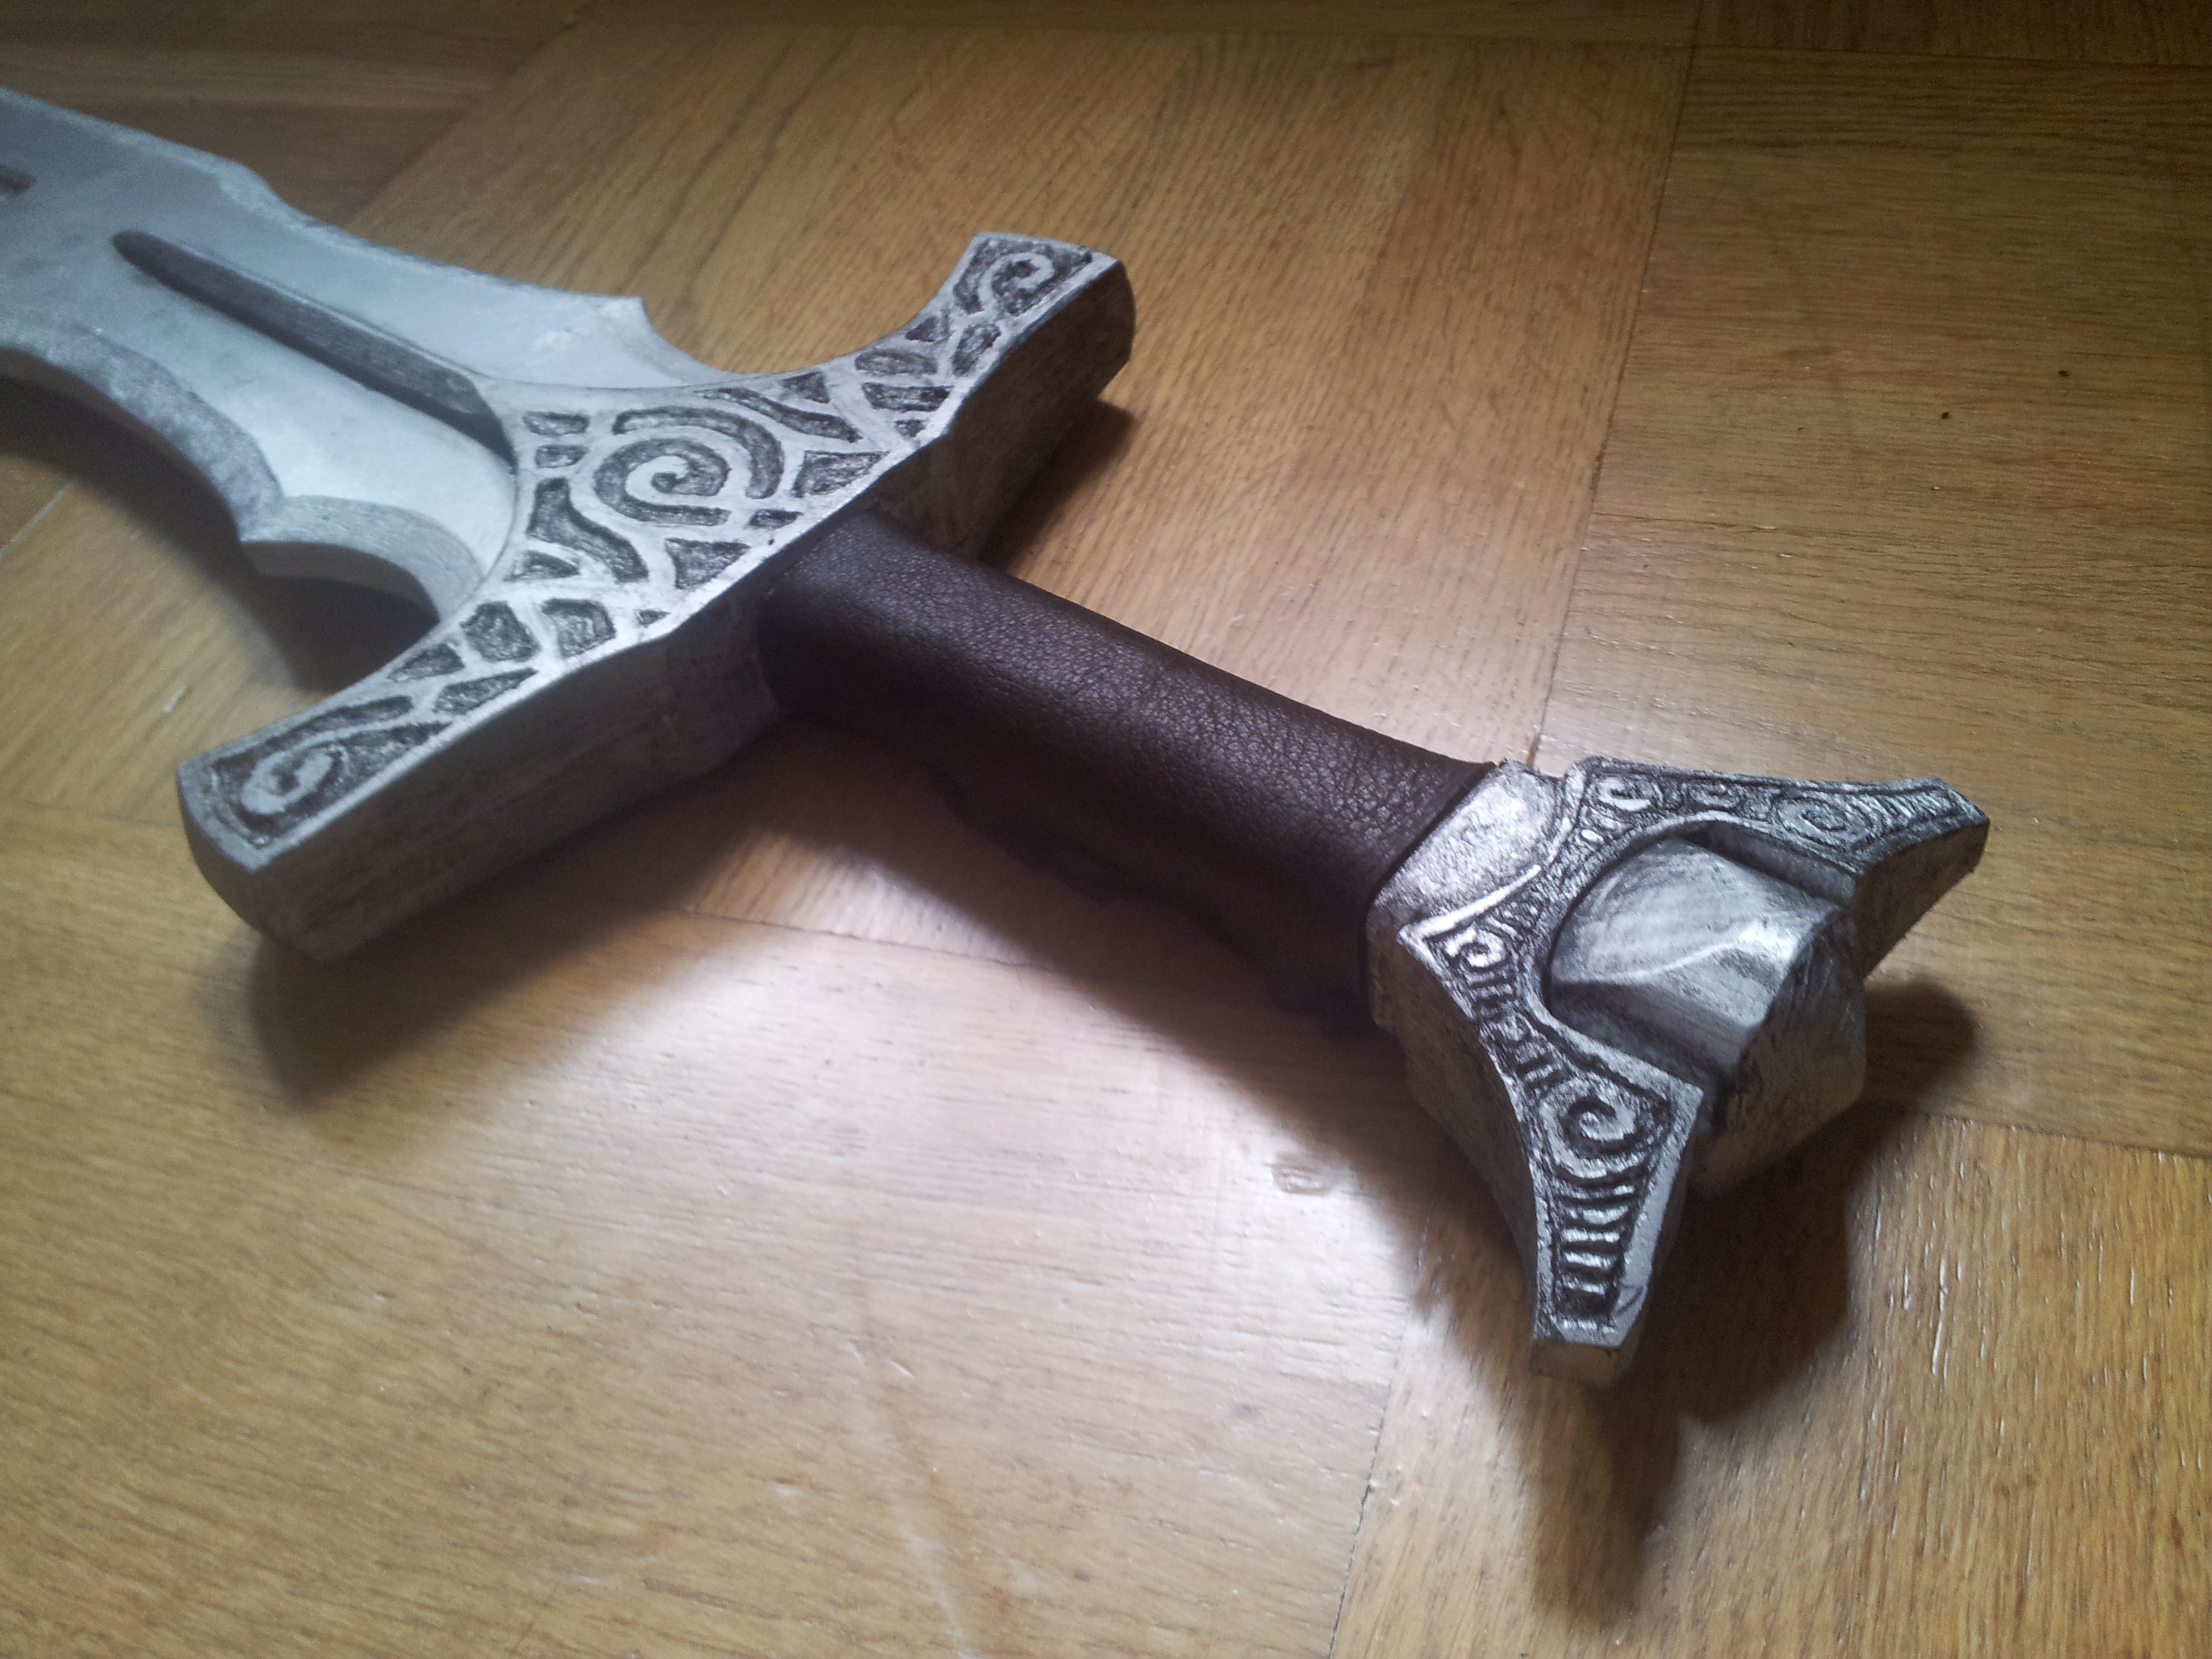 Skyrim Steel Sword - Done by Kikunai